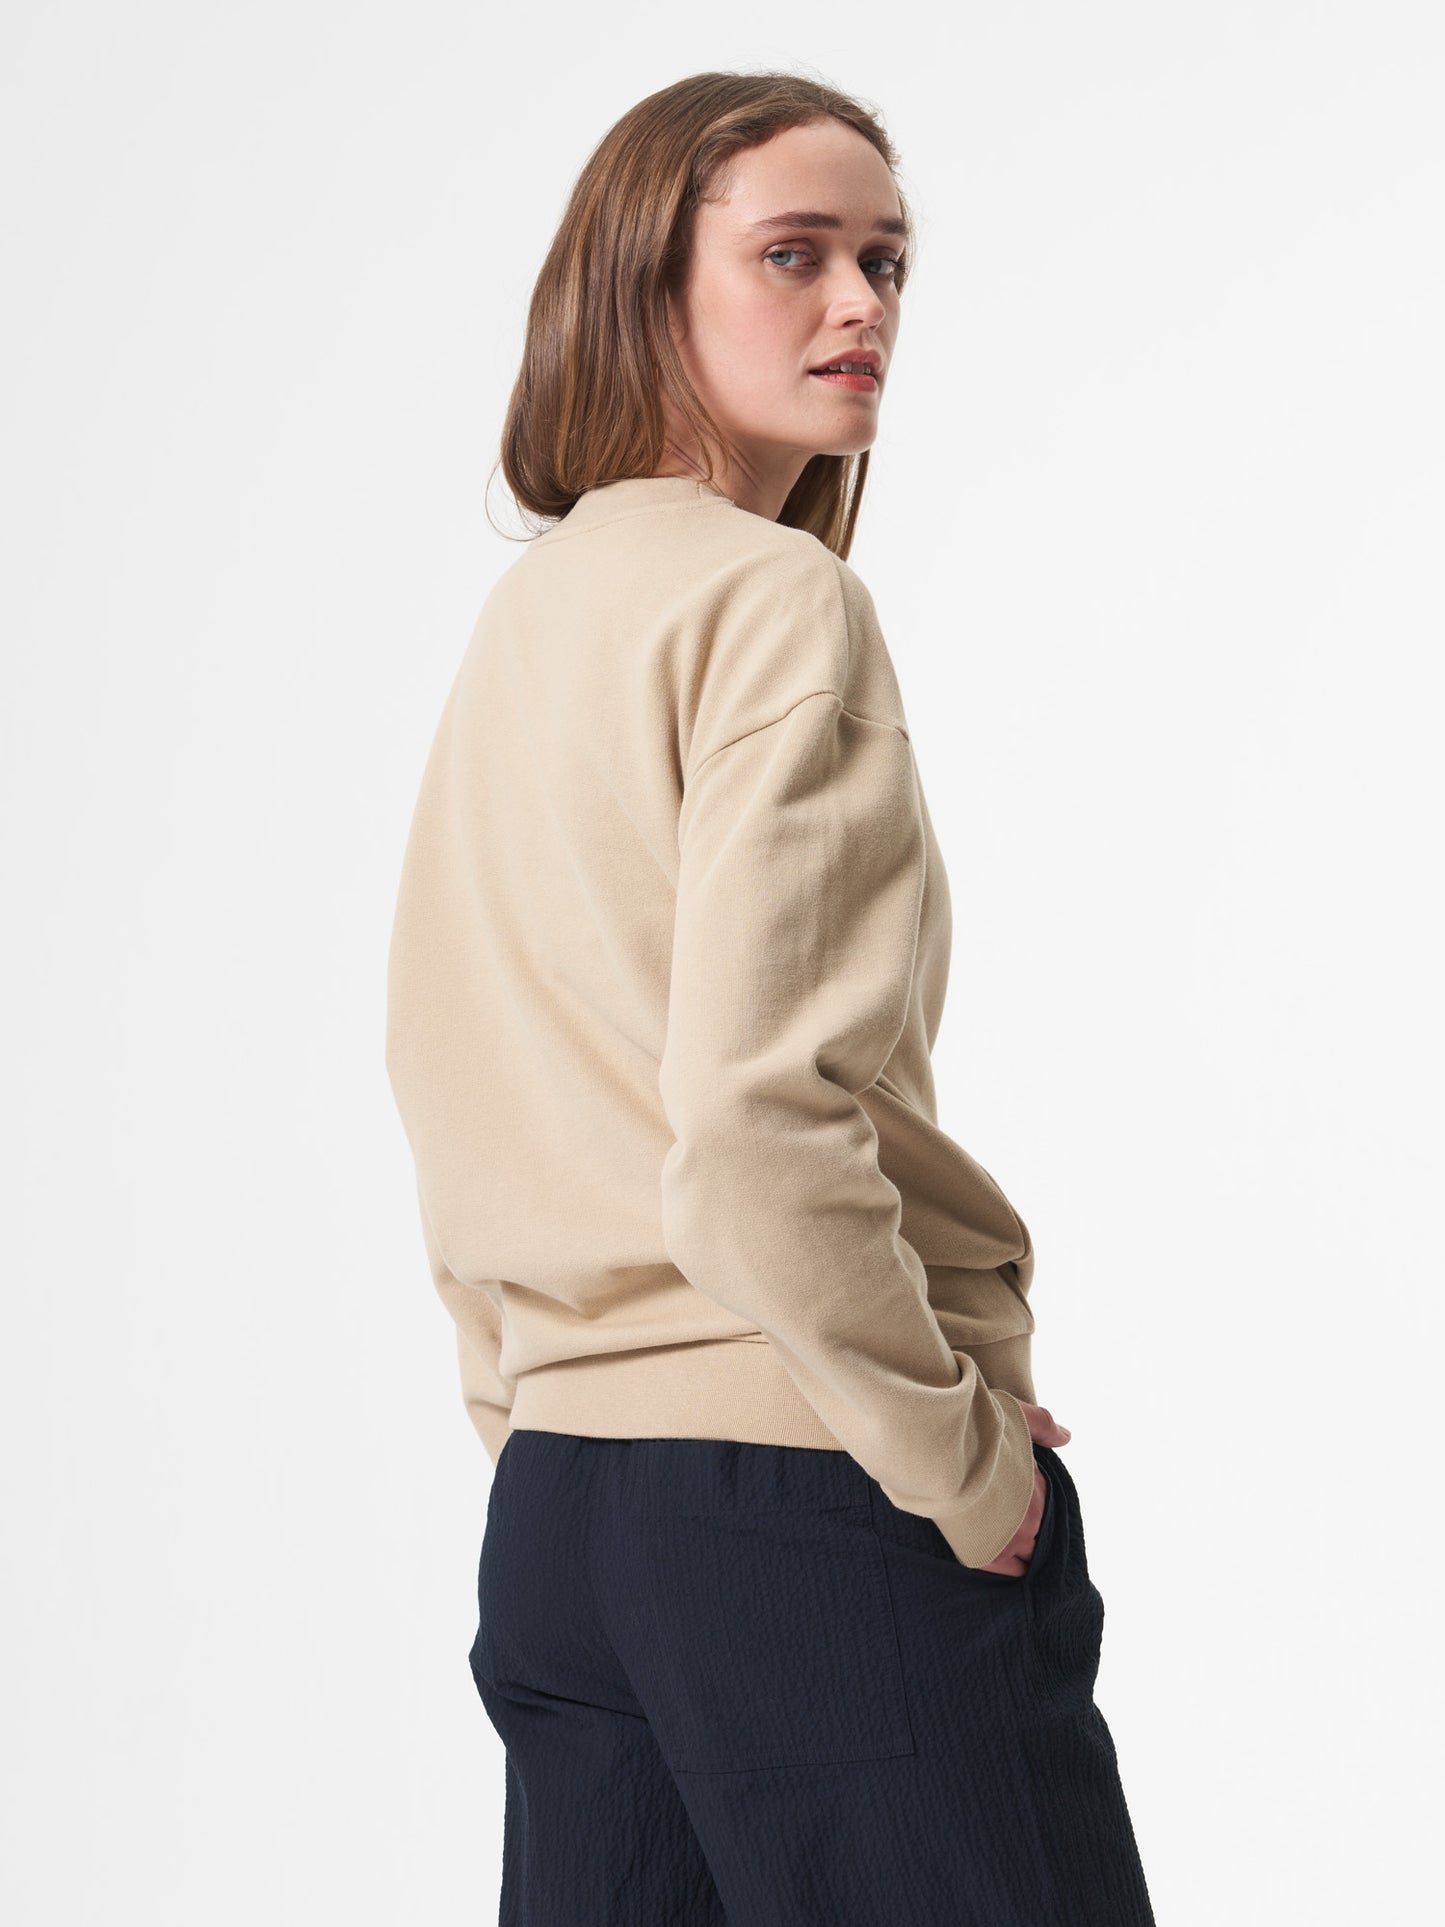 pinqponq-Sweatshirt-Caramel-Khaki-model-side